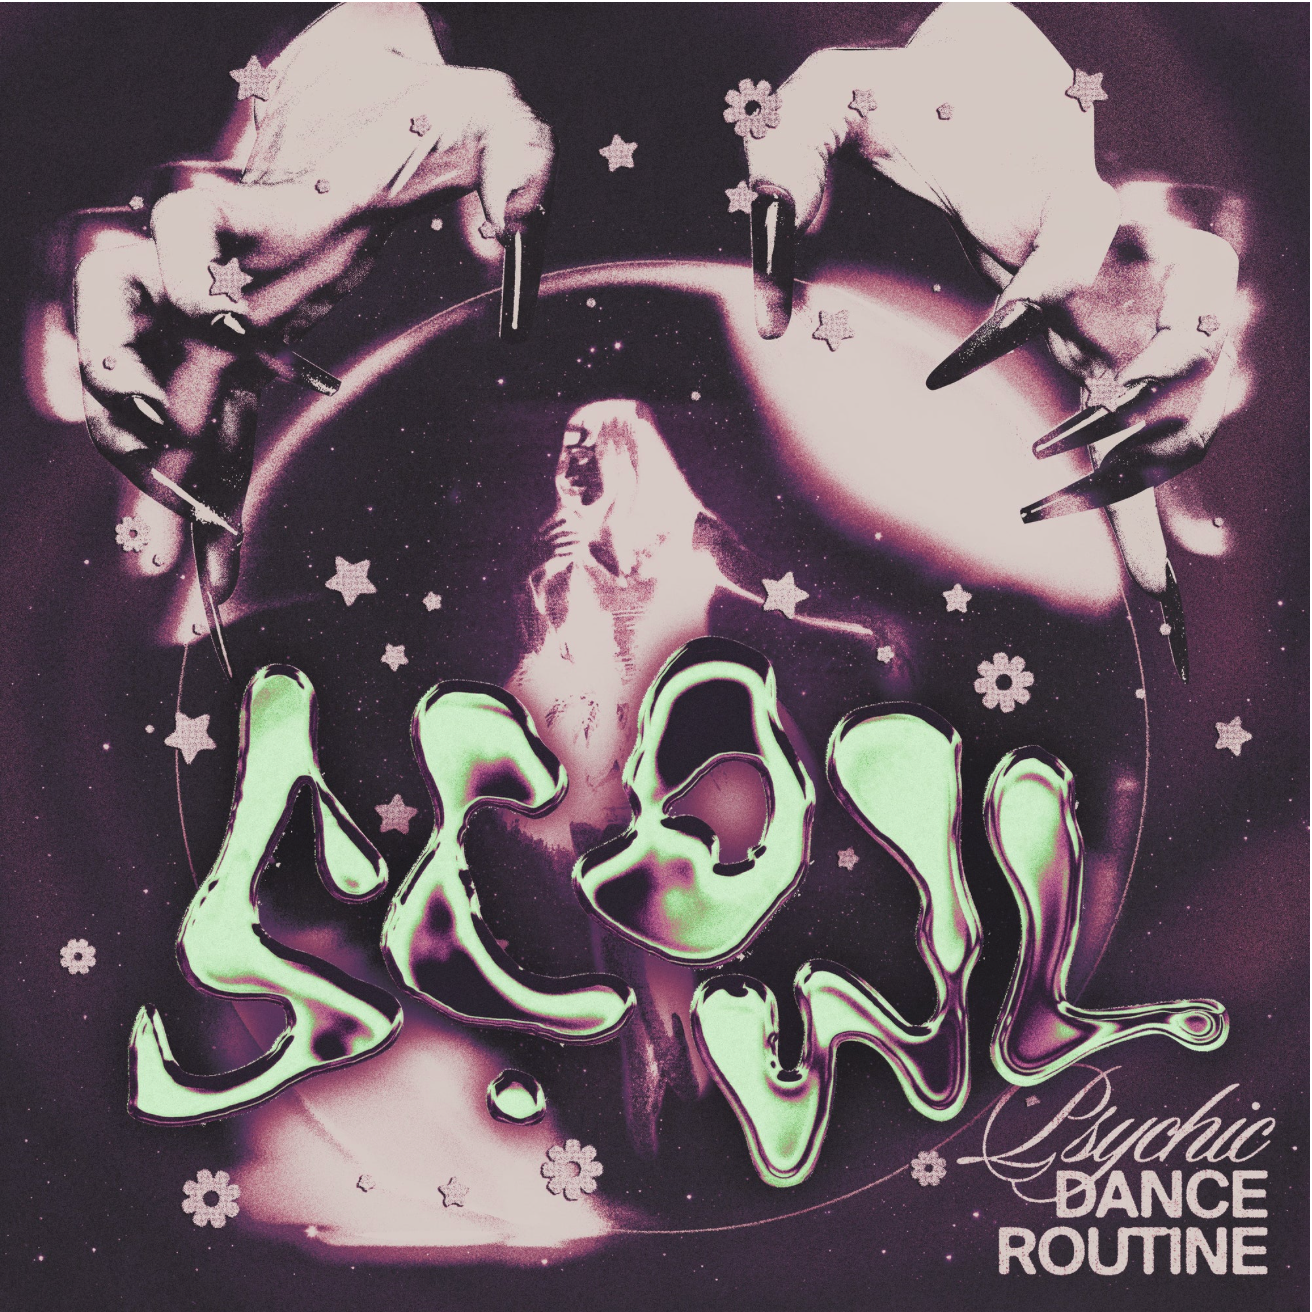 SCOWL - PSYCHIC DANCE ROUTINE Vinyl 12"